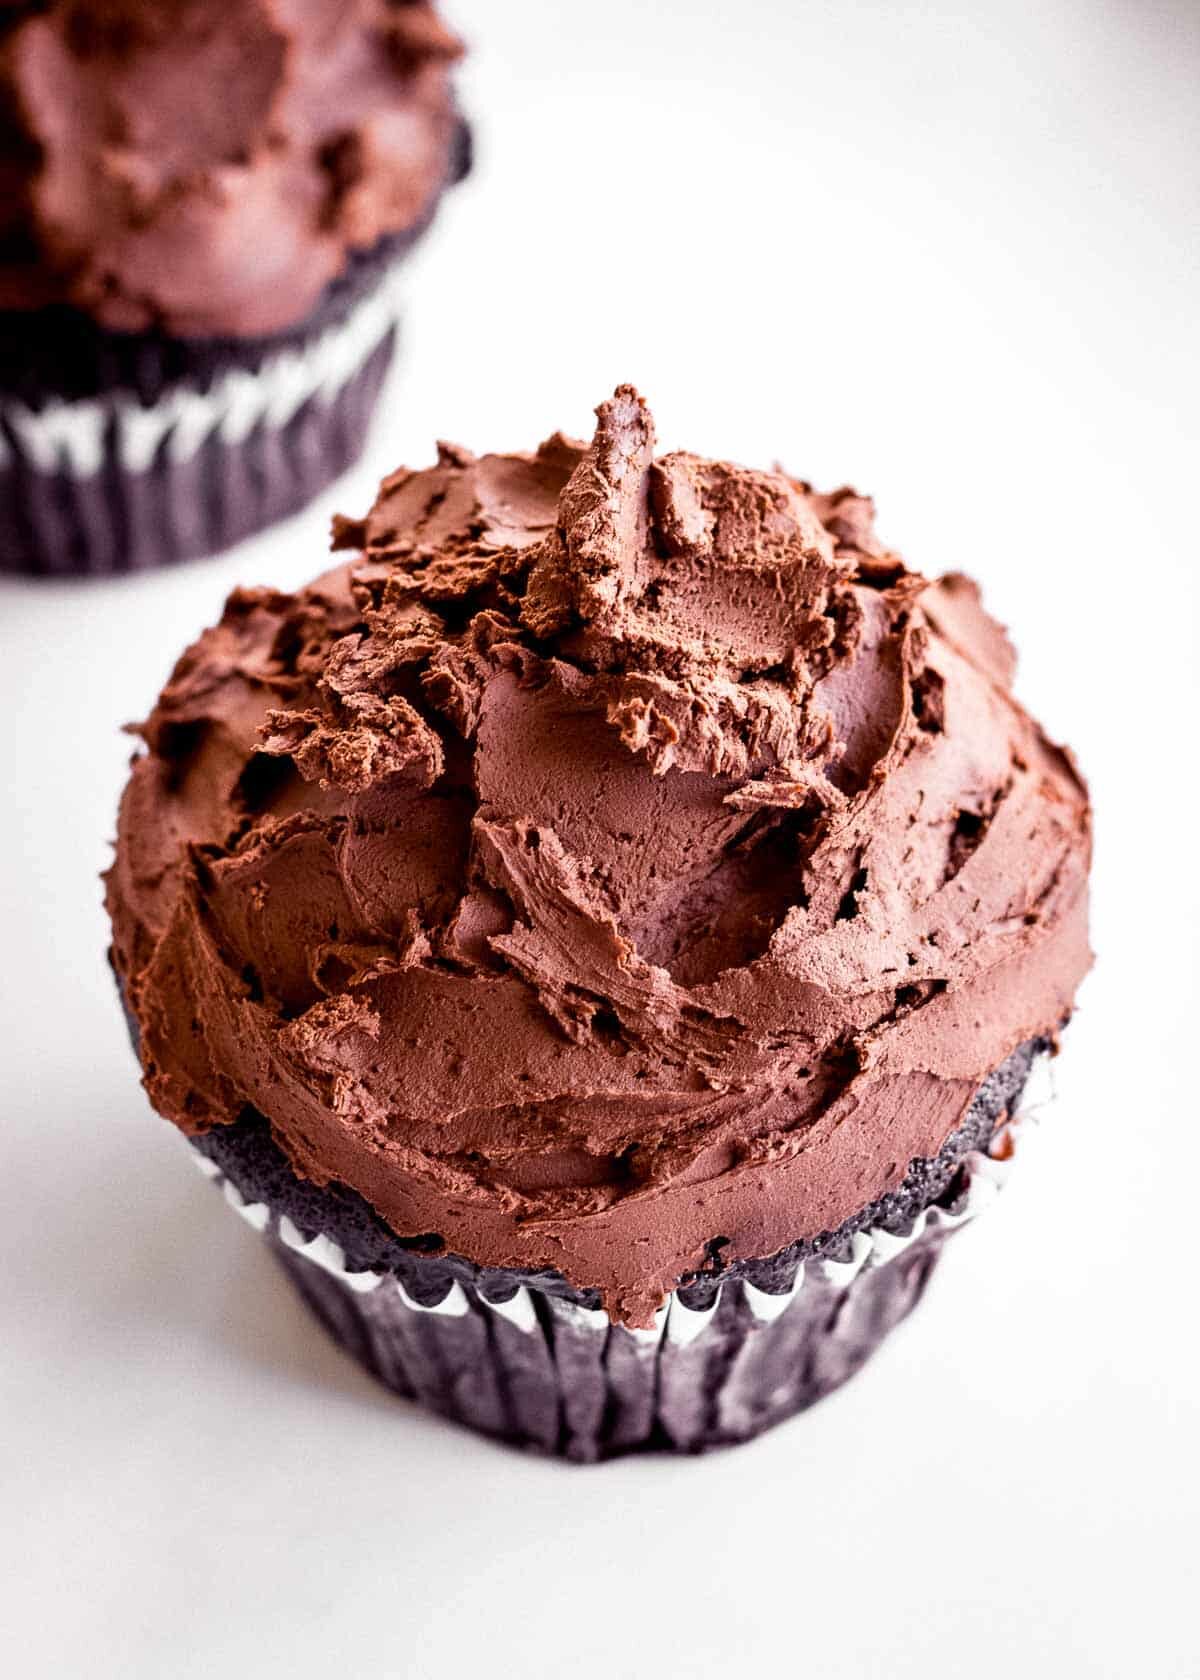 A chocolate cupcake decorated with vegan dark chocolate ganache.